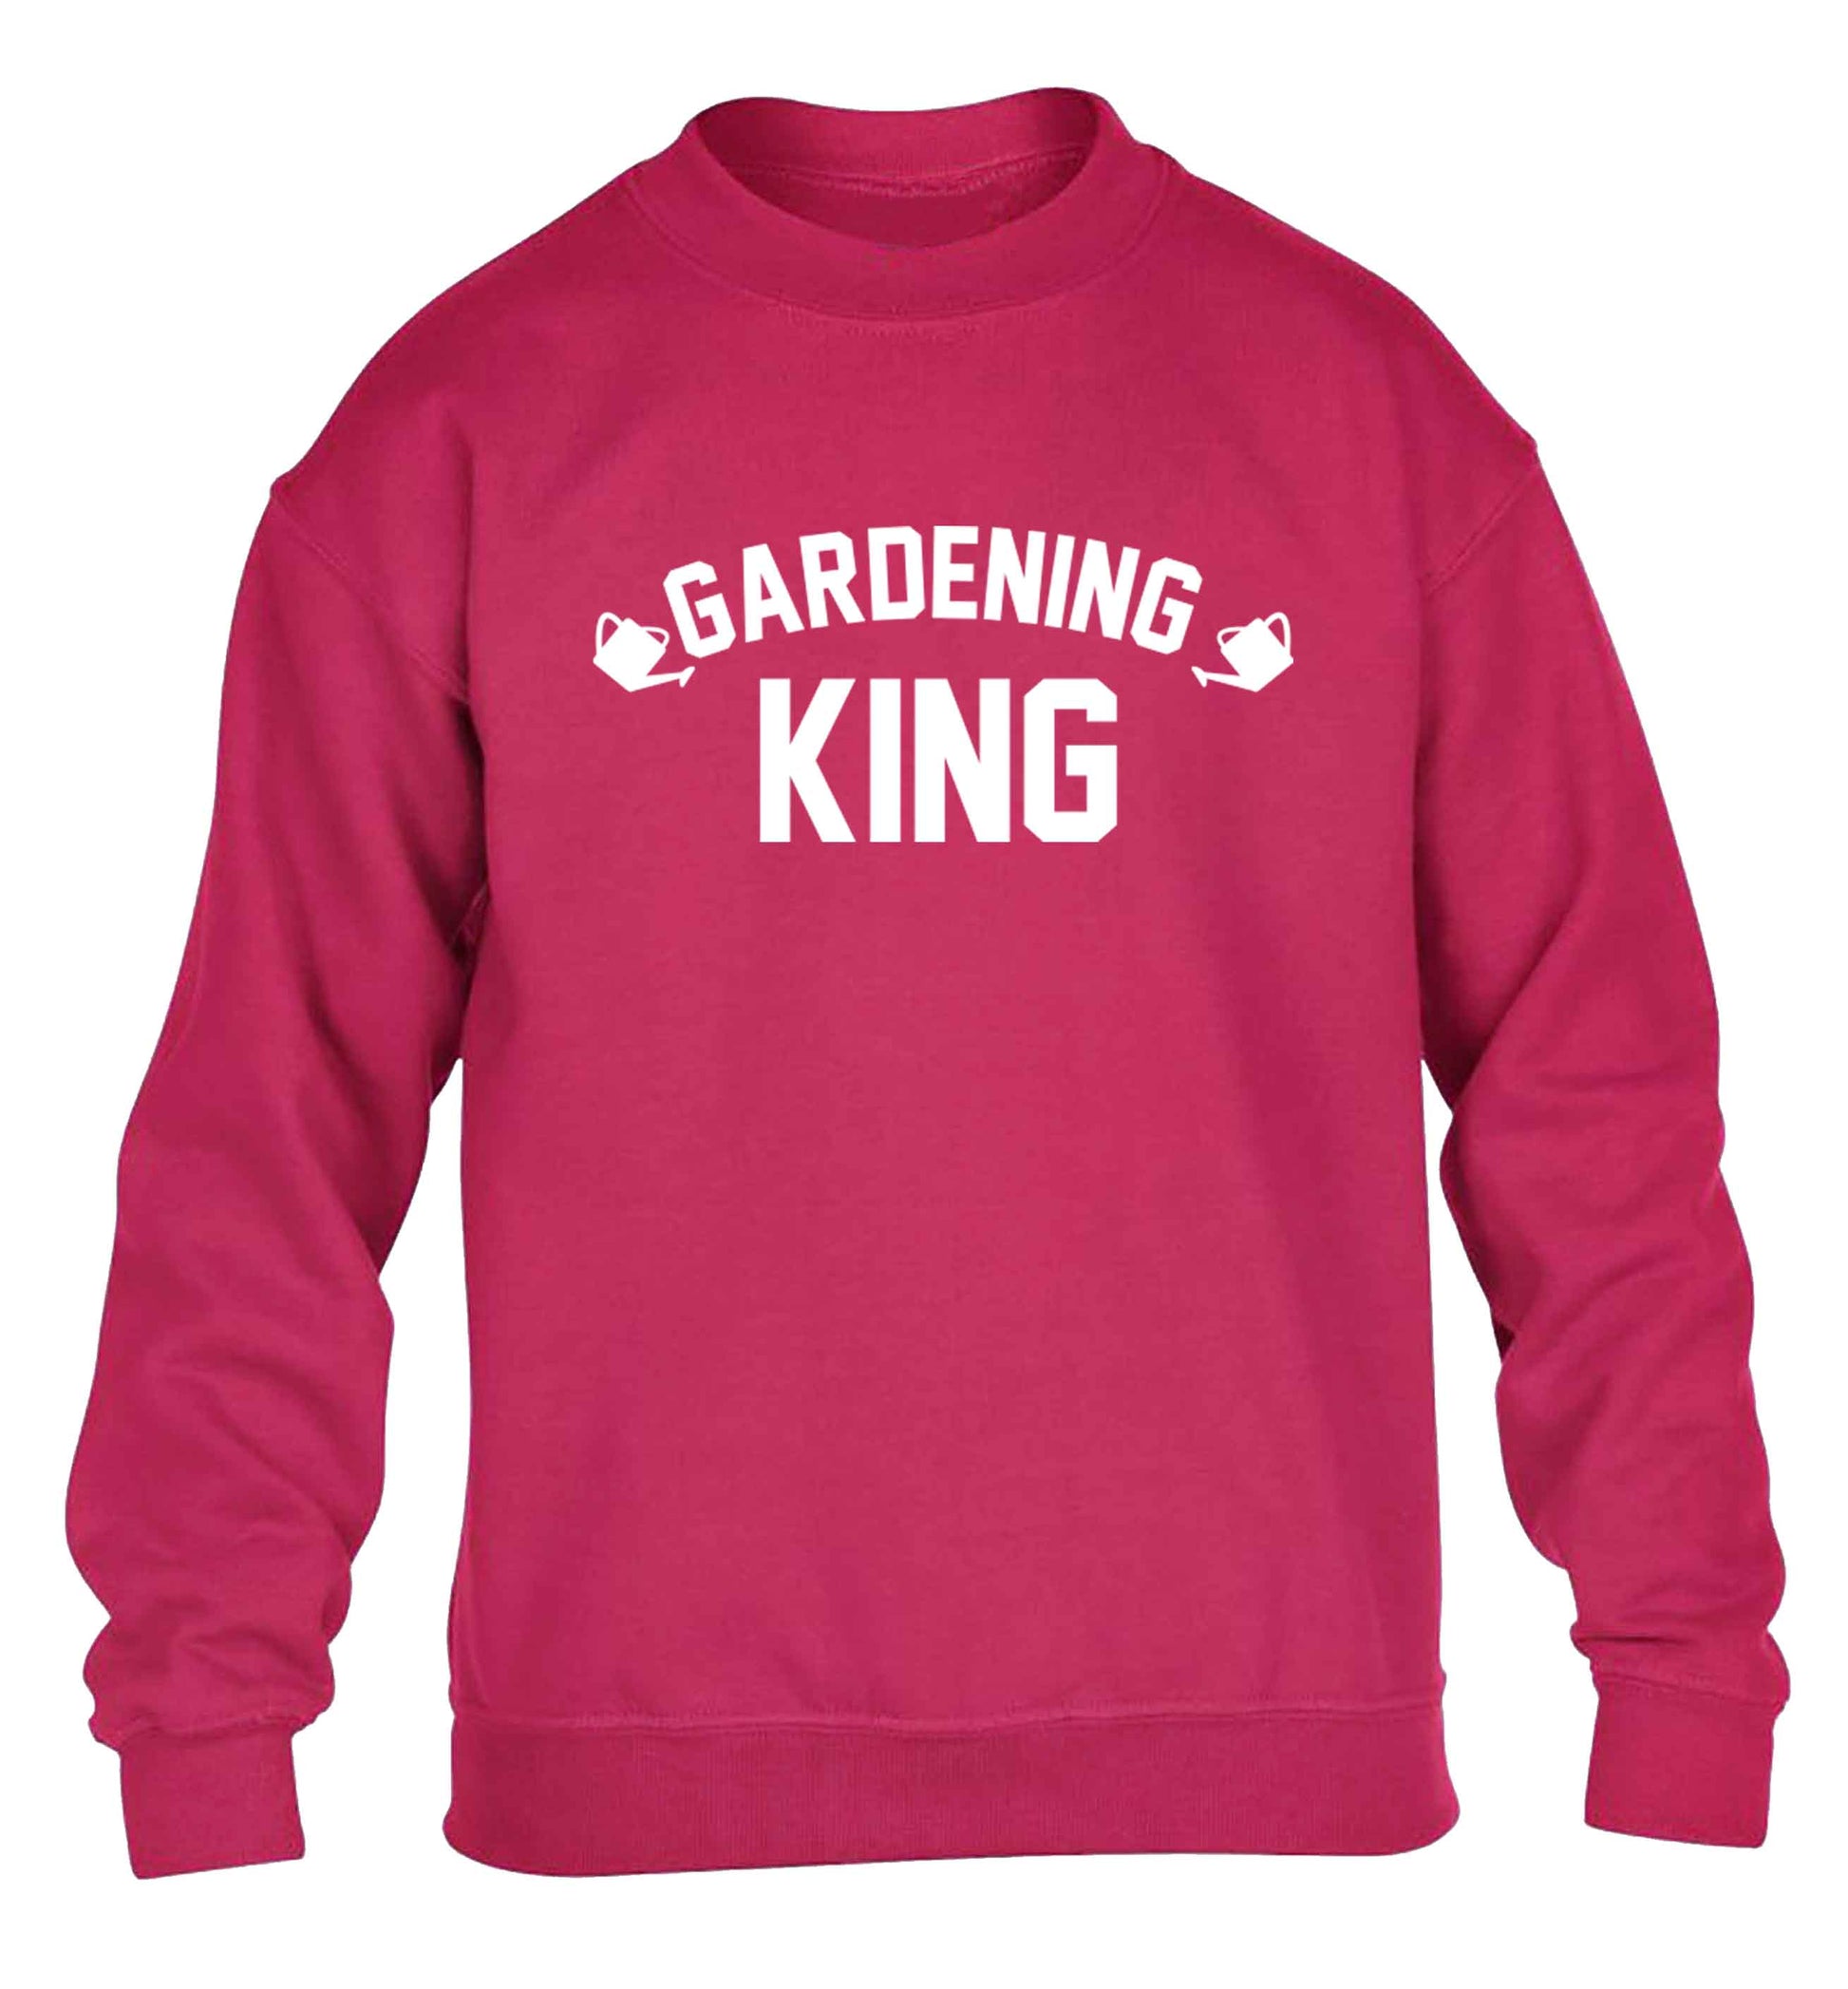 Gardening king children's pink sweater 12-13 Years